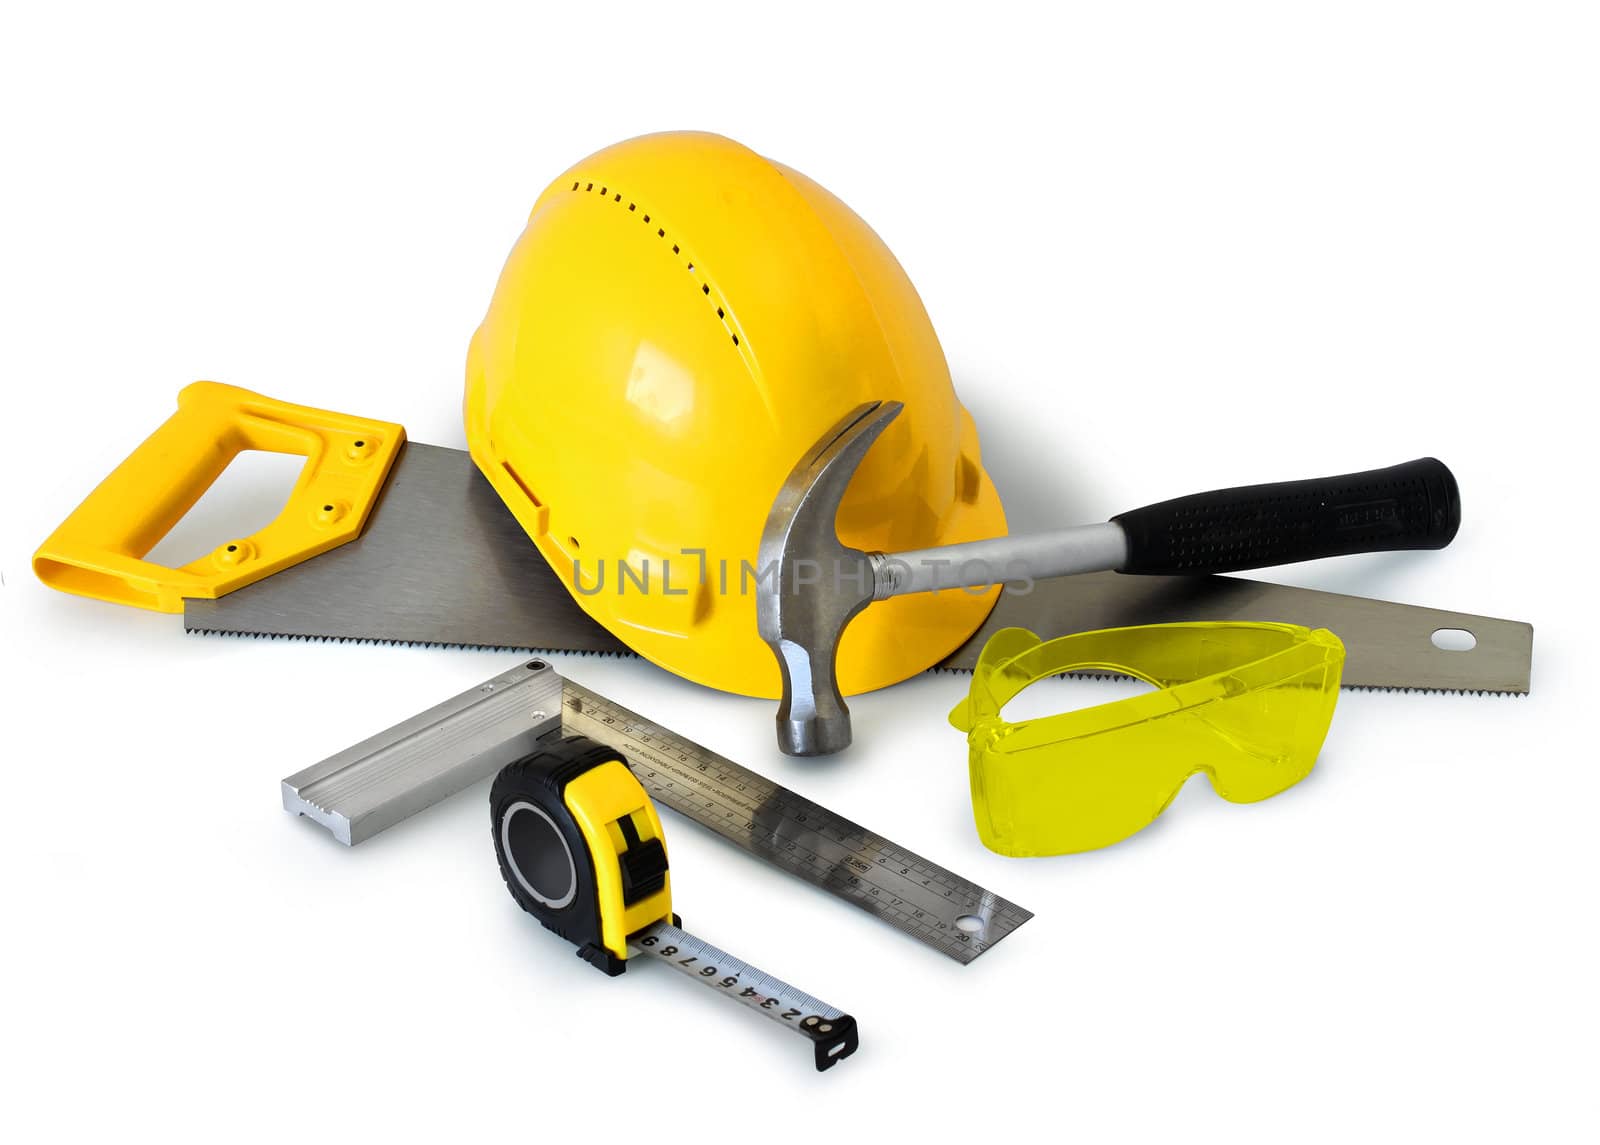 Construction tools by anterovium